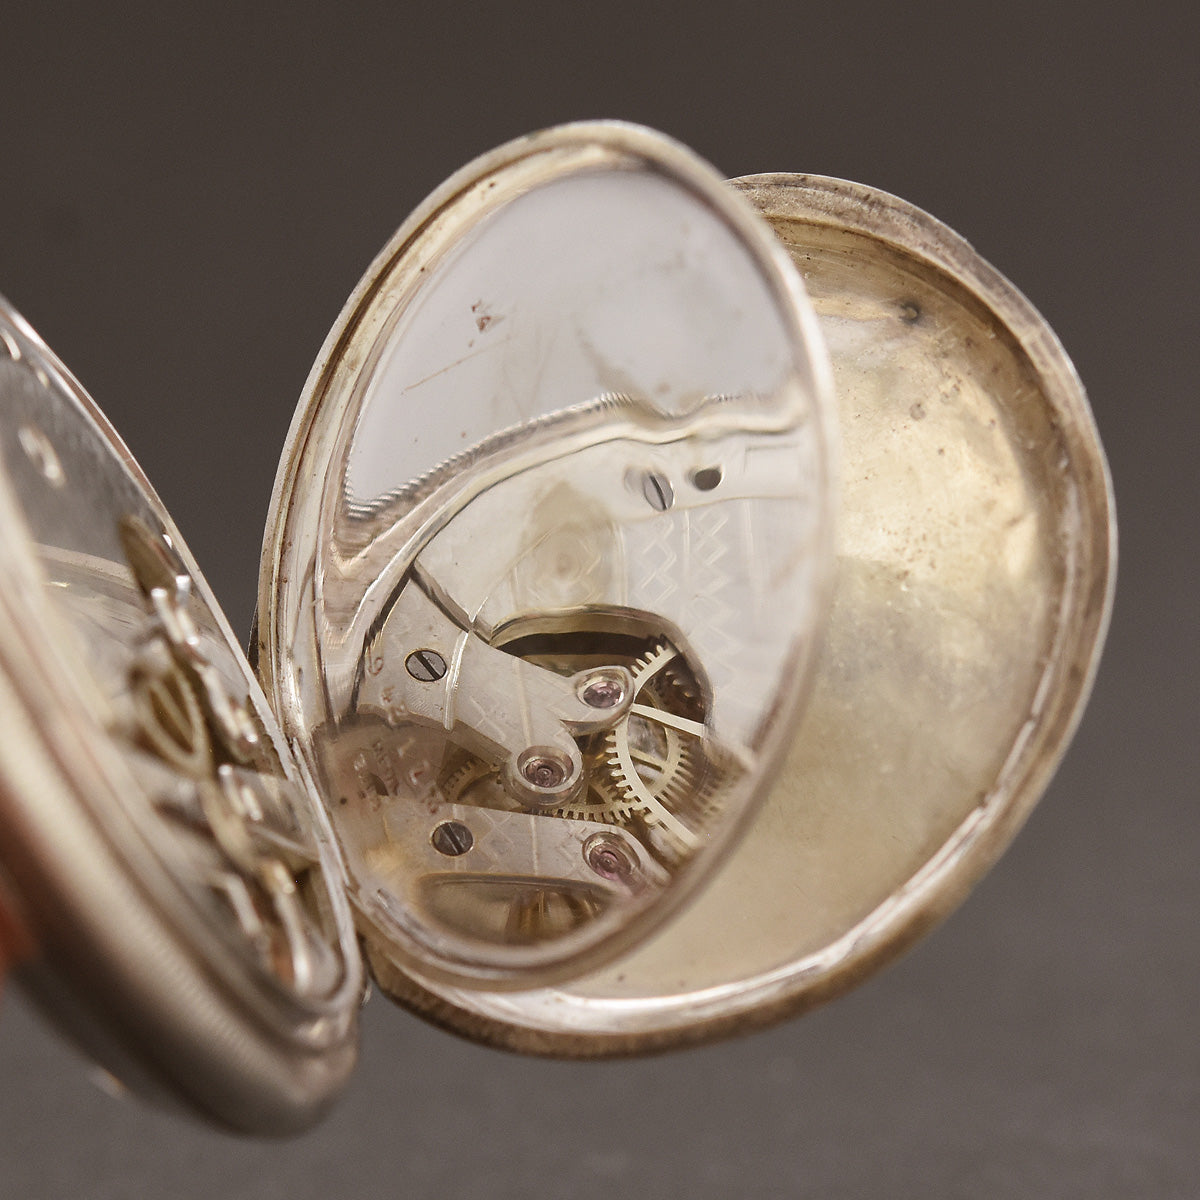 1898 LONGINES Swiss Antique Silver Pocket Watch